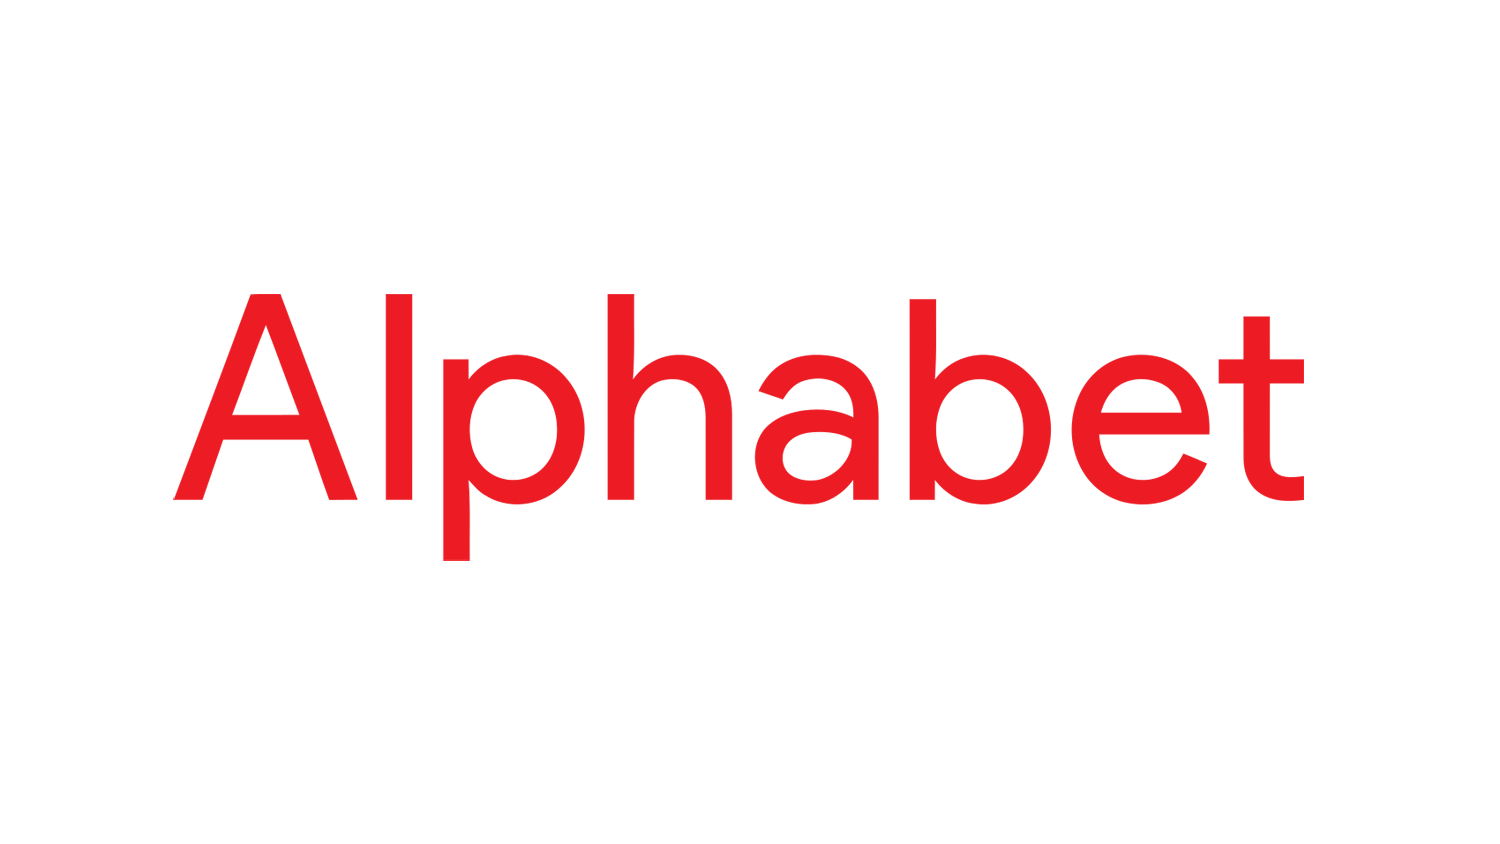 Alphabet Feature Image. Alpha